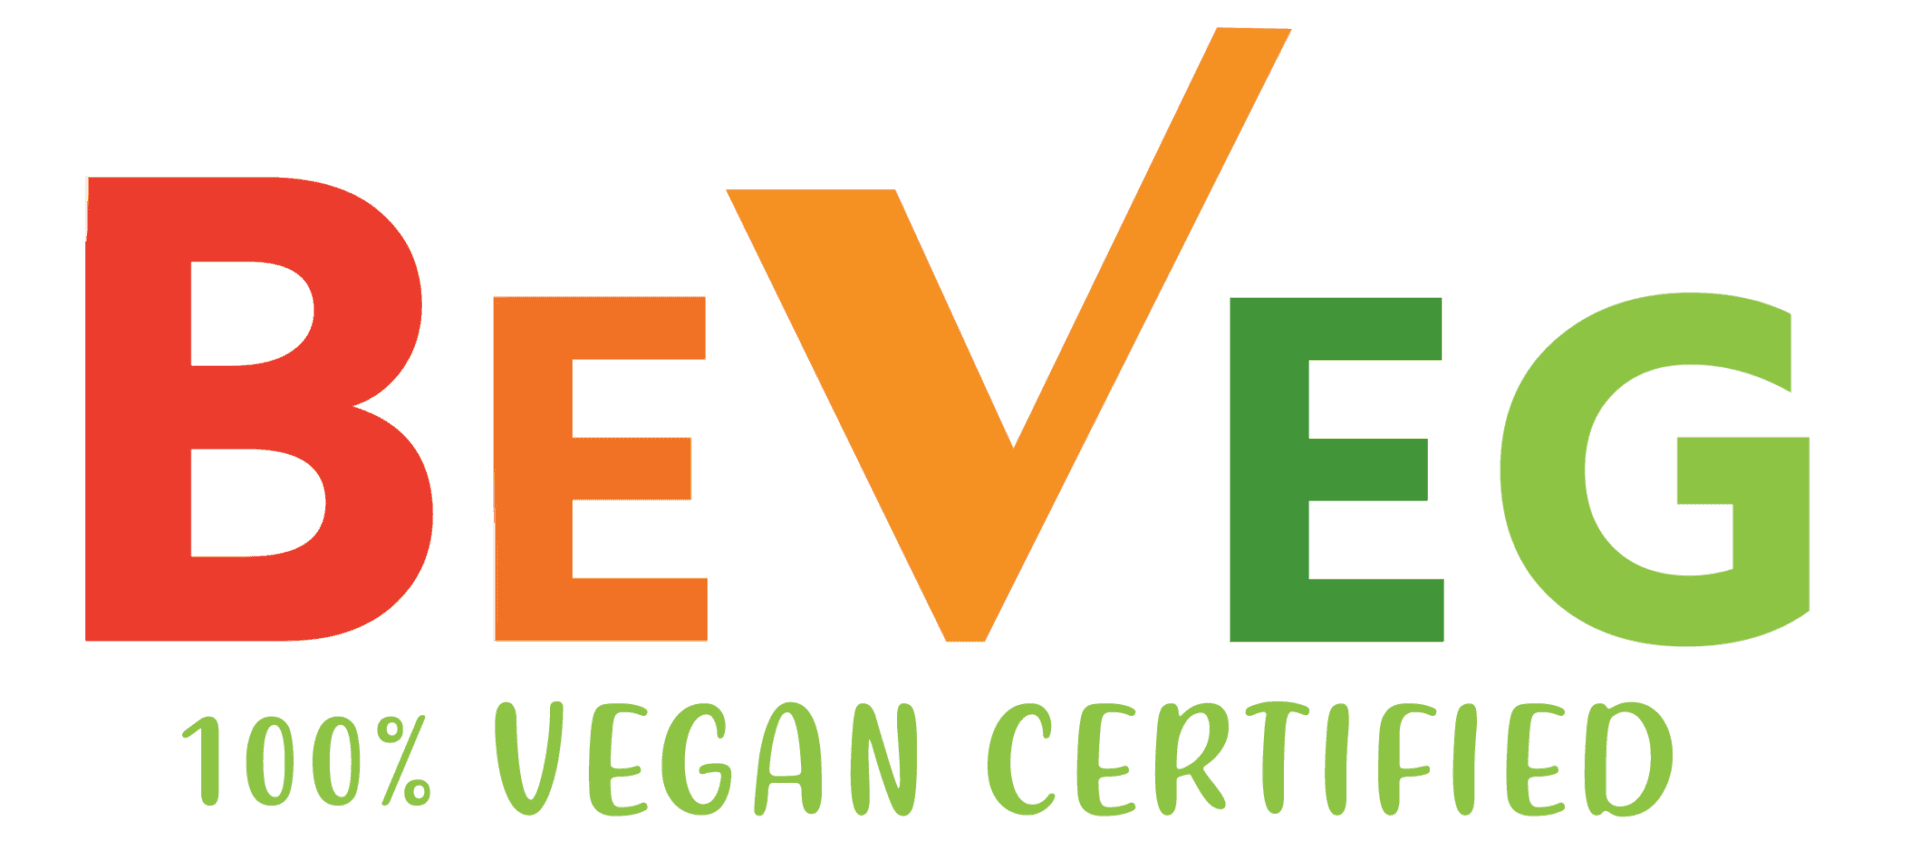 Vegan certification by BeVeg